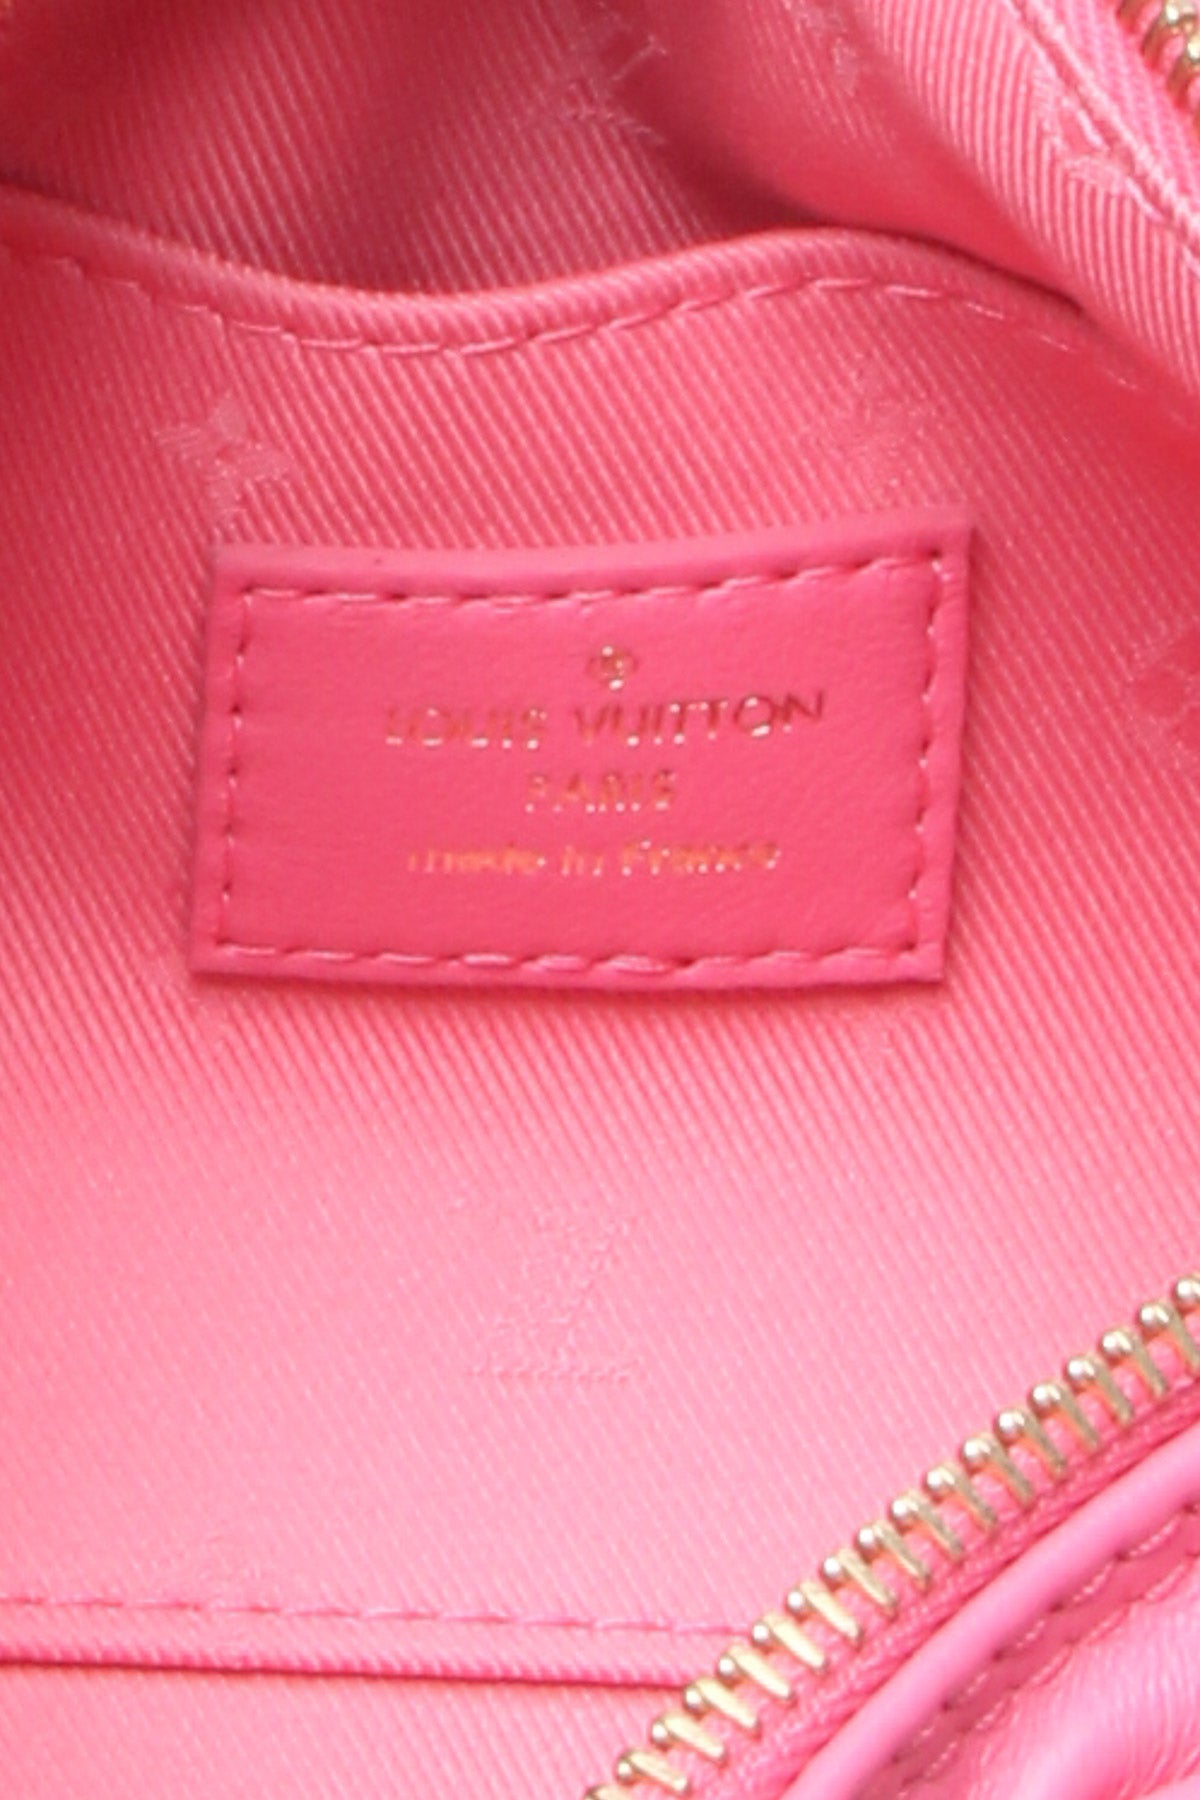 Papillon BB Bubblegram Leather - Handbags